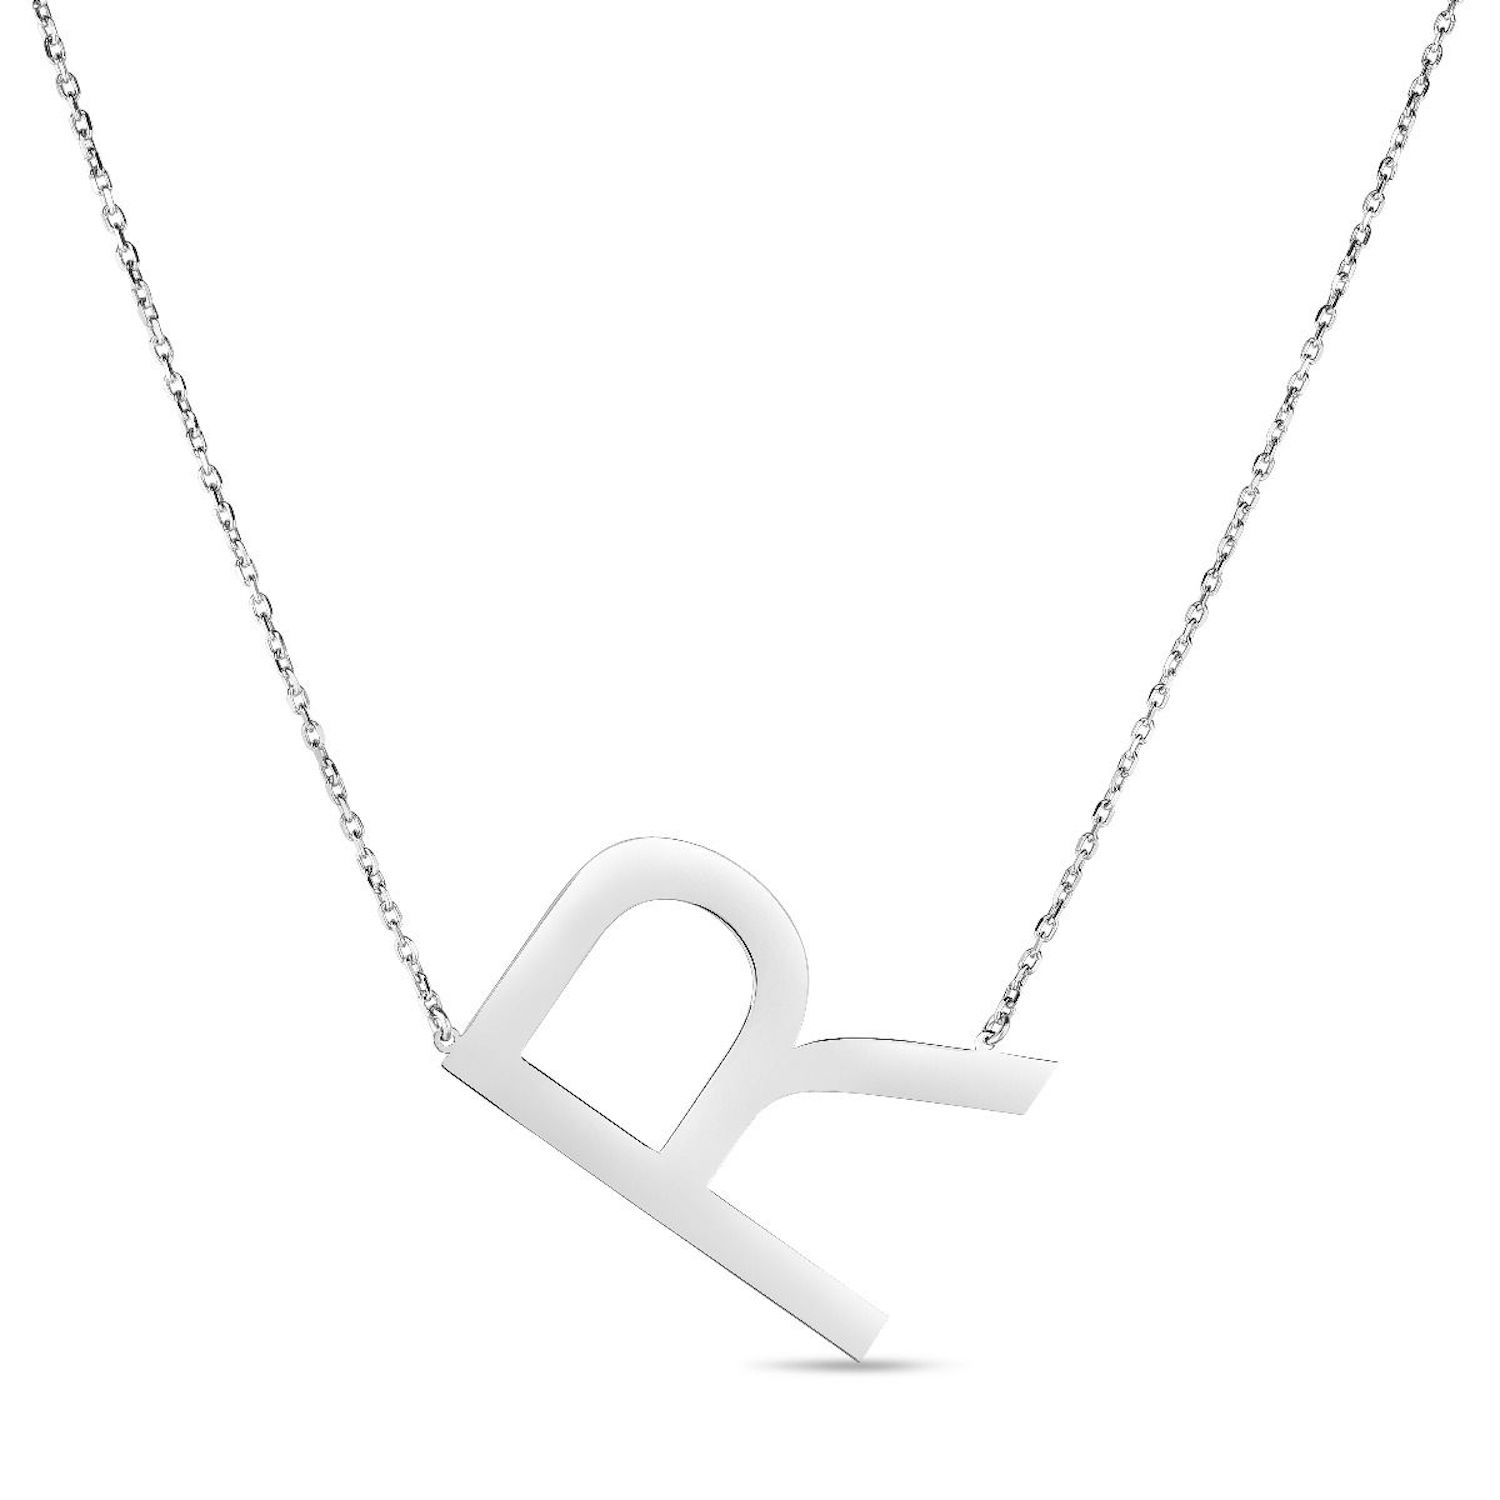 Sterling Silver Sideways Initials Letter Pendant Necklace 16"-18" Adj. 1.5" - R